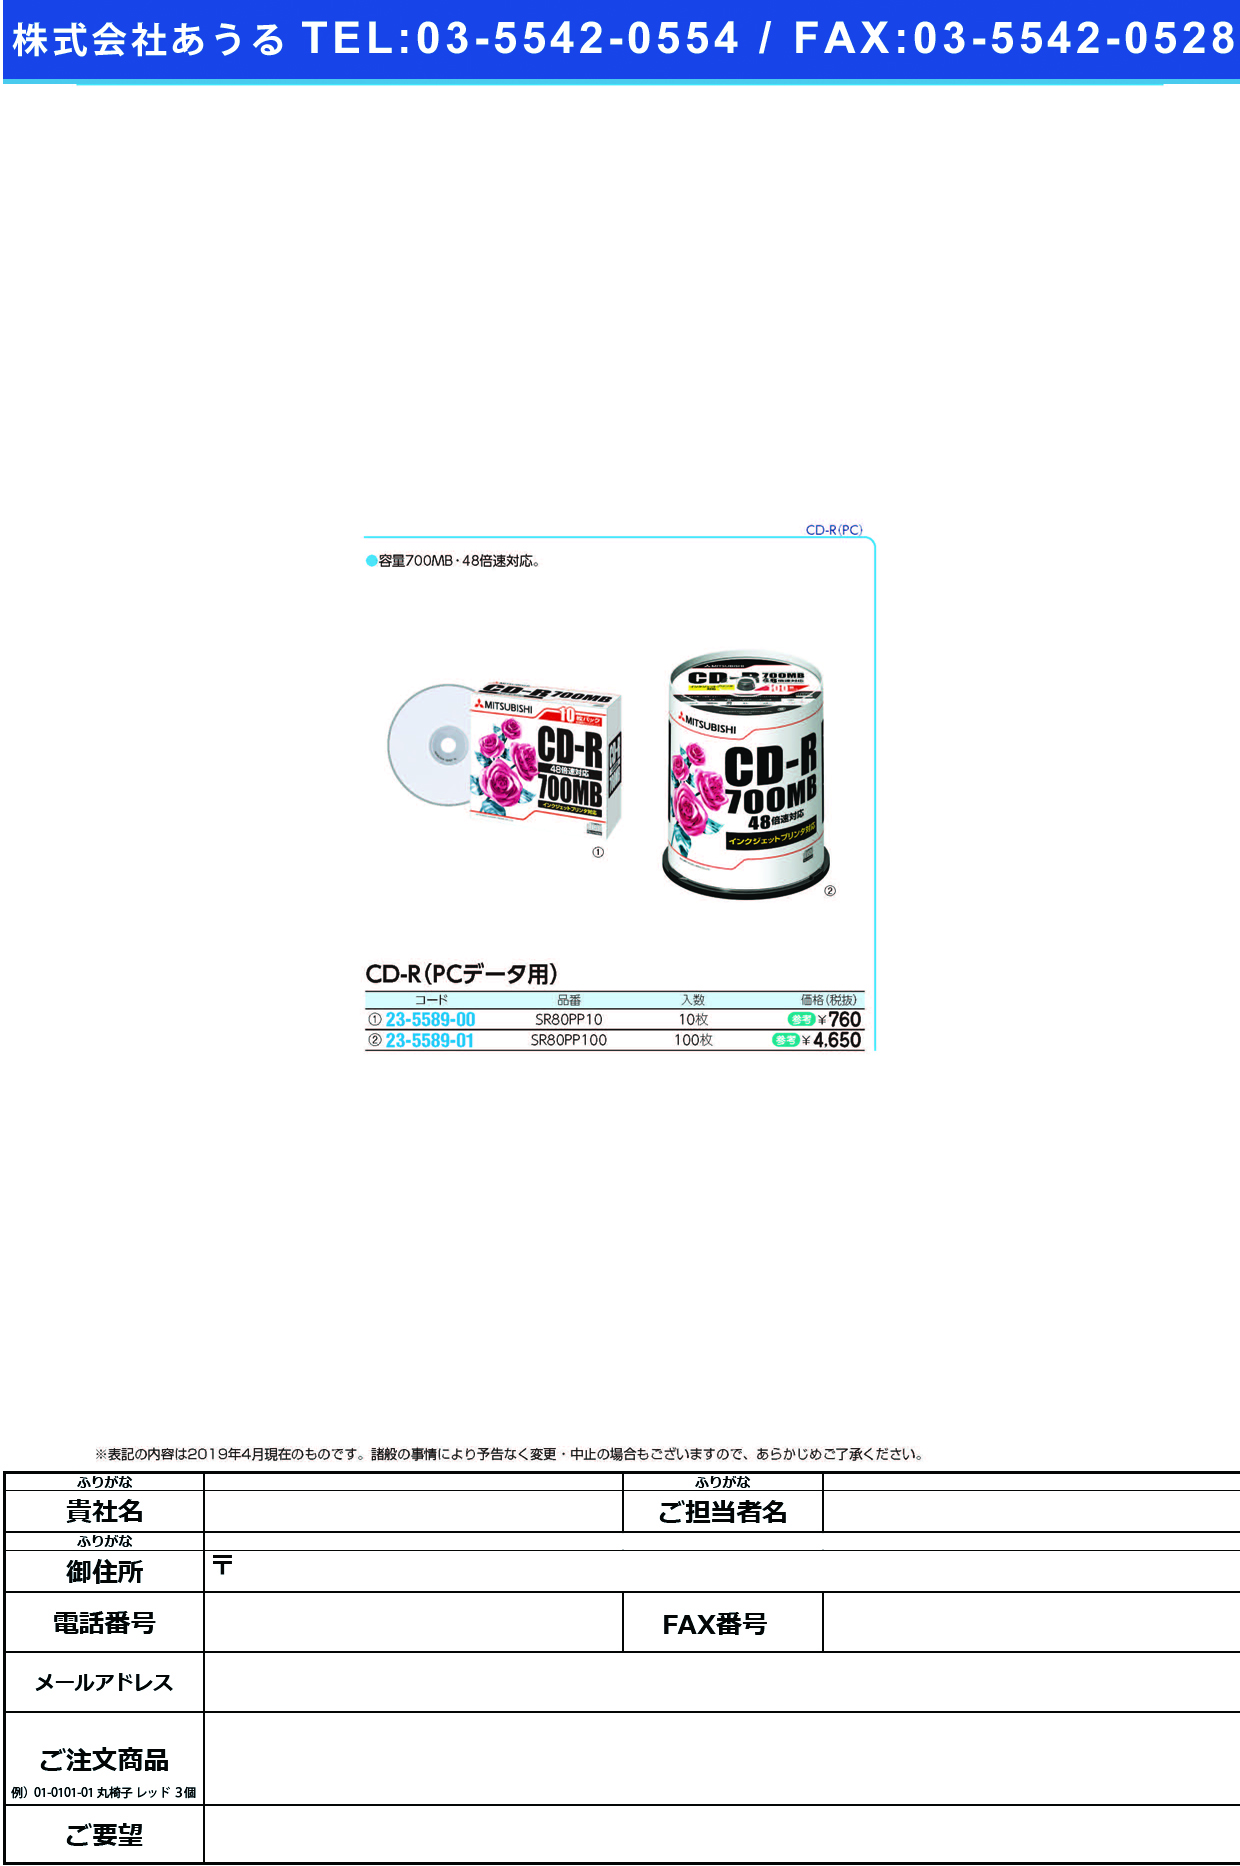 (23-5589-00)ＰＣデータ用ＣＤ−Ｒ SR80PP10(10ﾏｲ) PCﾃﾞｰﾀﾖｳCD-R【1包単位】【2019年カタログ商品】